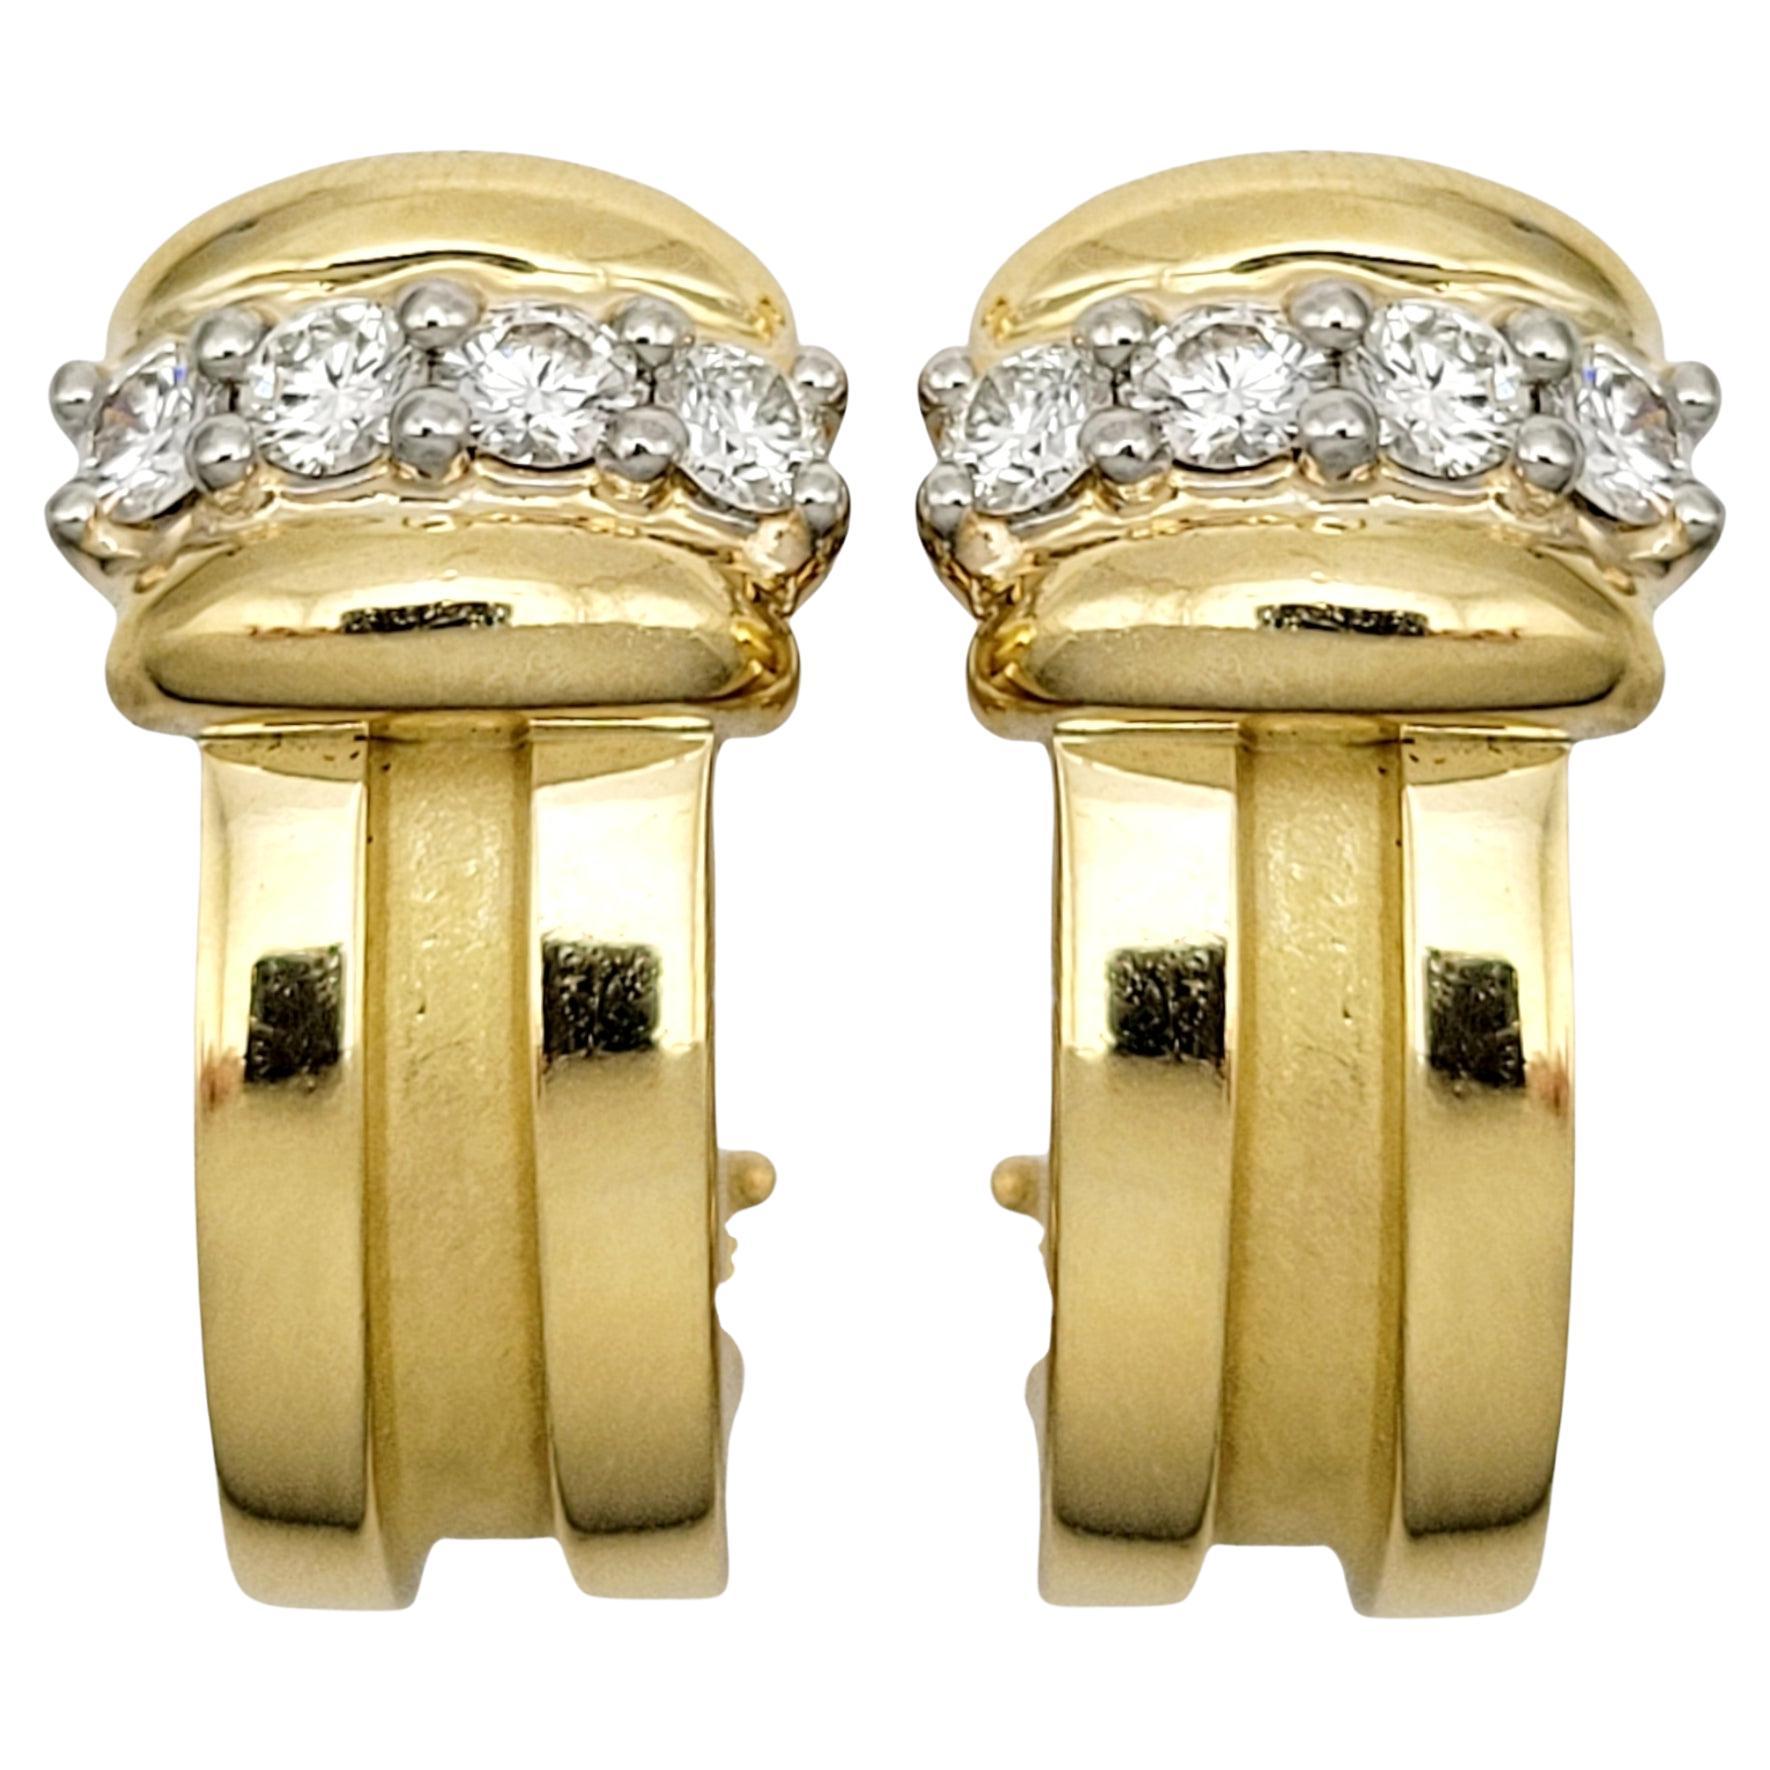 Is 1-carat too big for earrings?